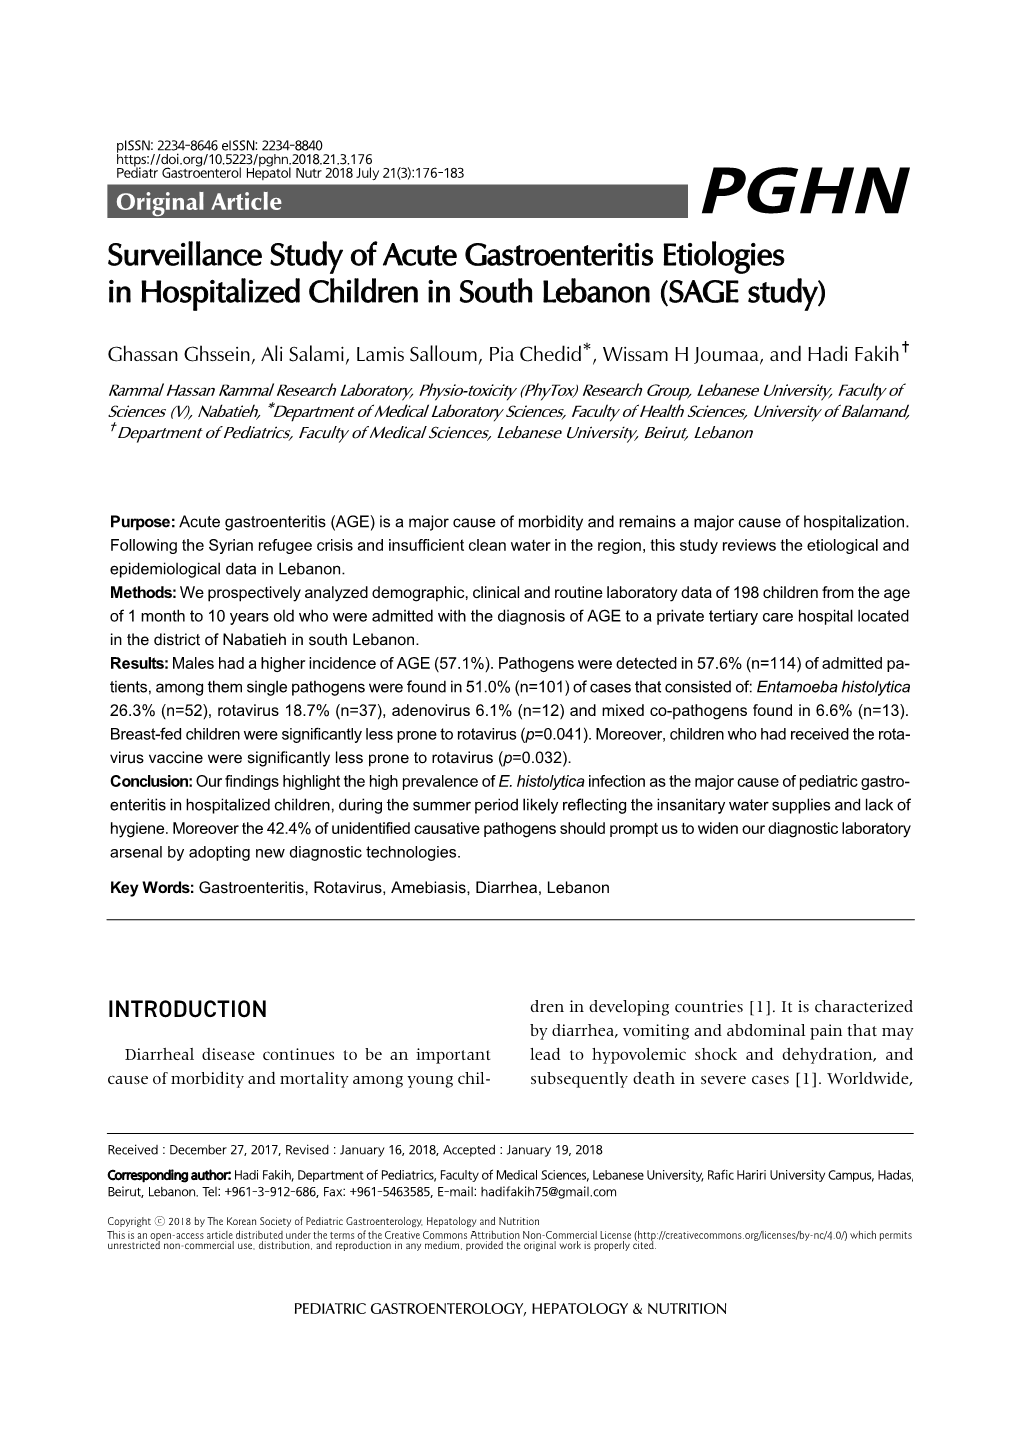 Surveillance Study of Acute Gastroenteritis Etiologies in Hospitalized Children in South Lebanon (SAGE Study)